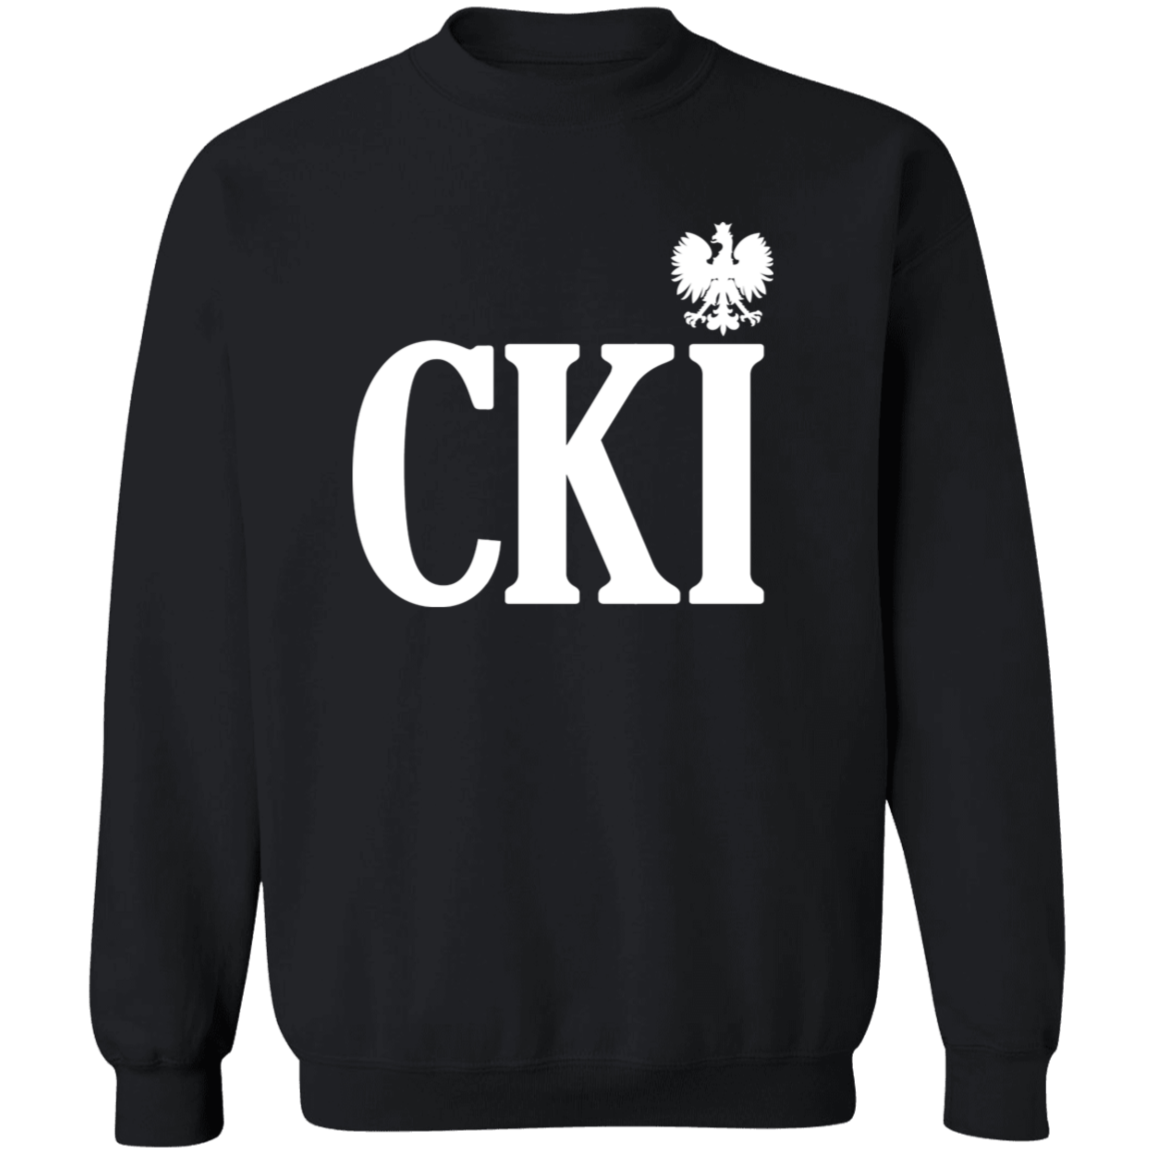 CKI Polish Surname Ending Apparel CustomCat G180 Crewneck Pullover Sweatshirt Black S